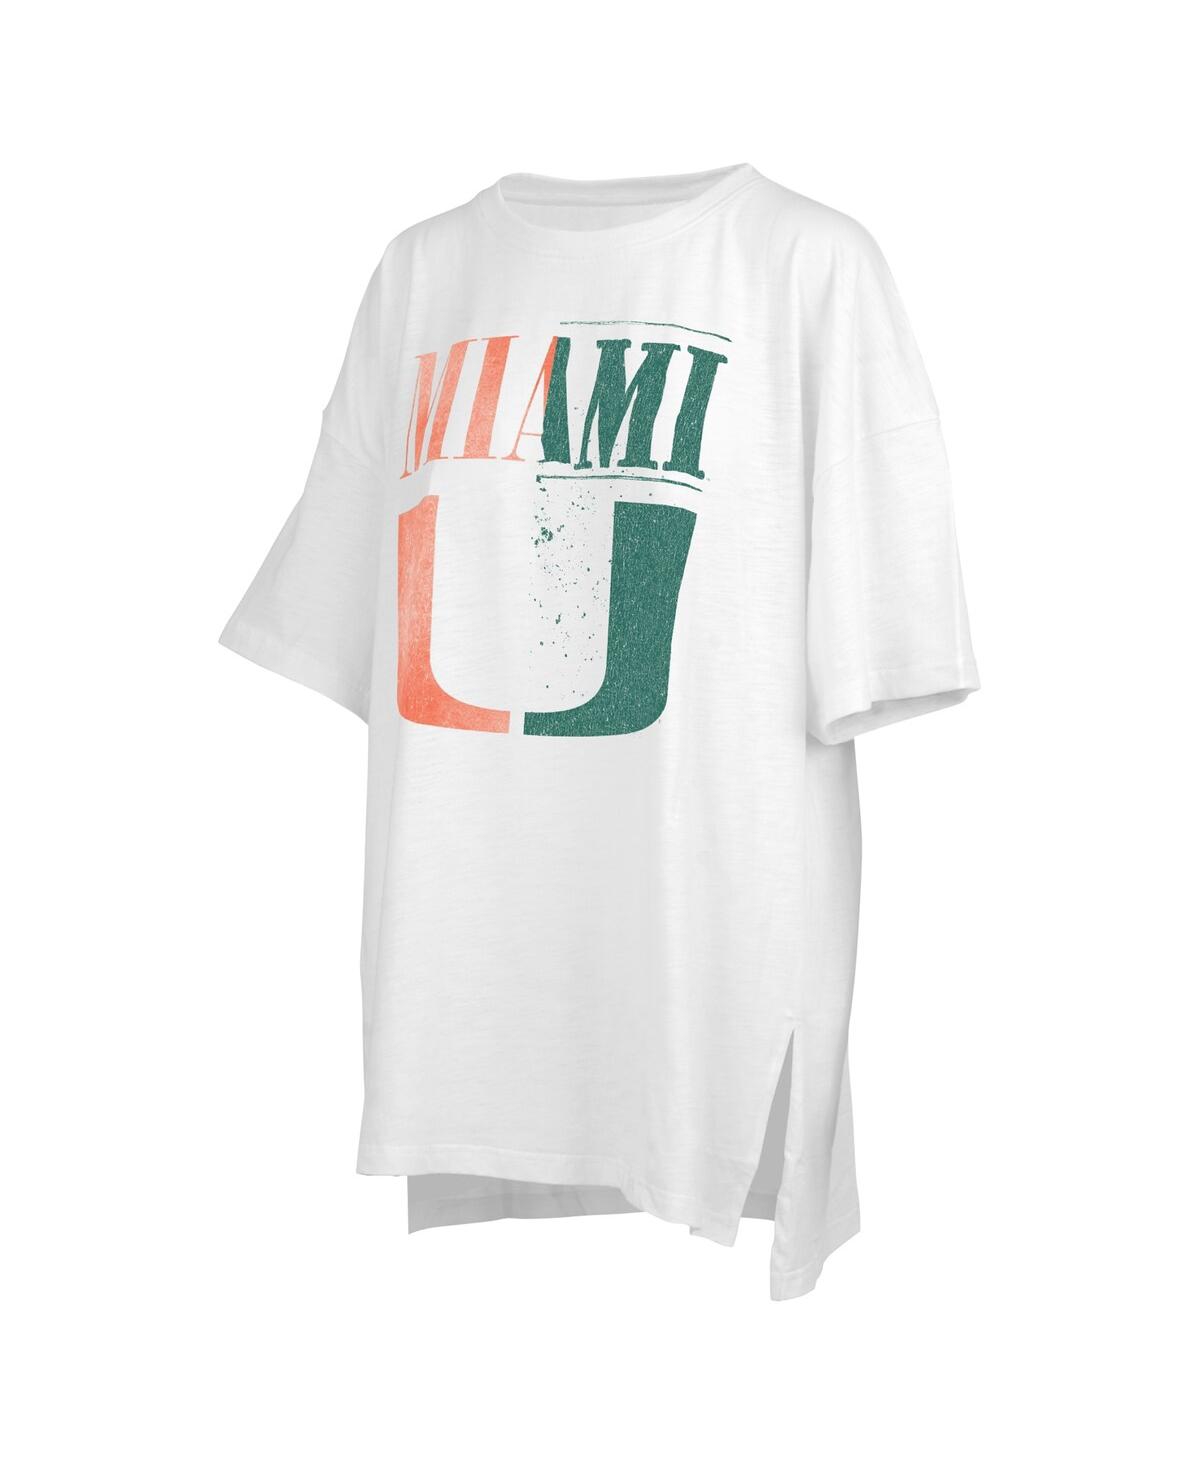 Shop Pressbox Women's  White Distressed Miami Hurricanes Lickety-split Oversized T-shirt